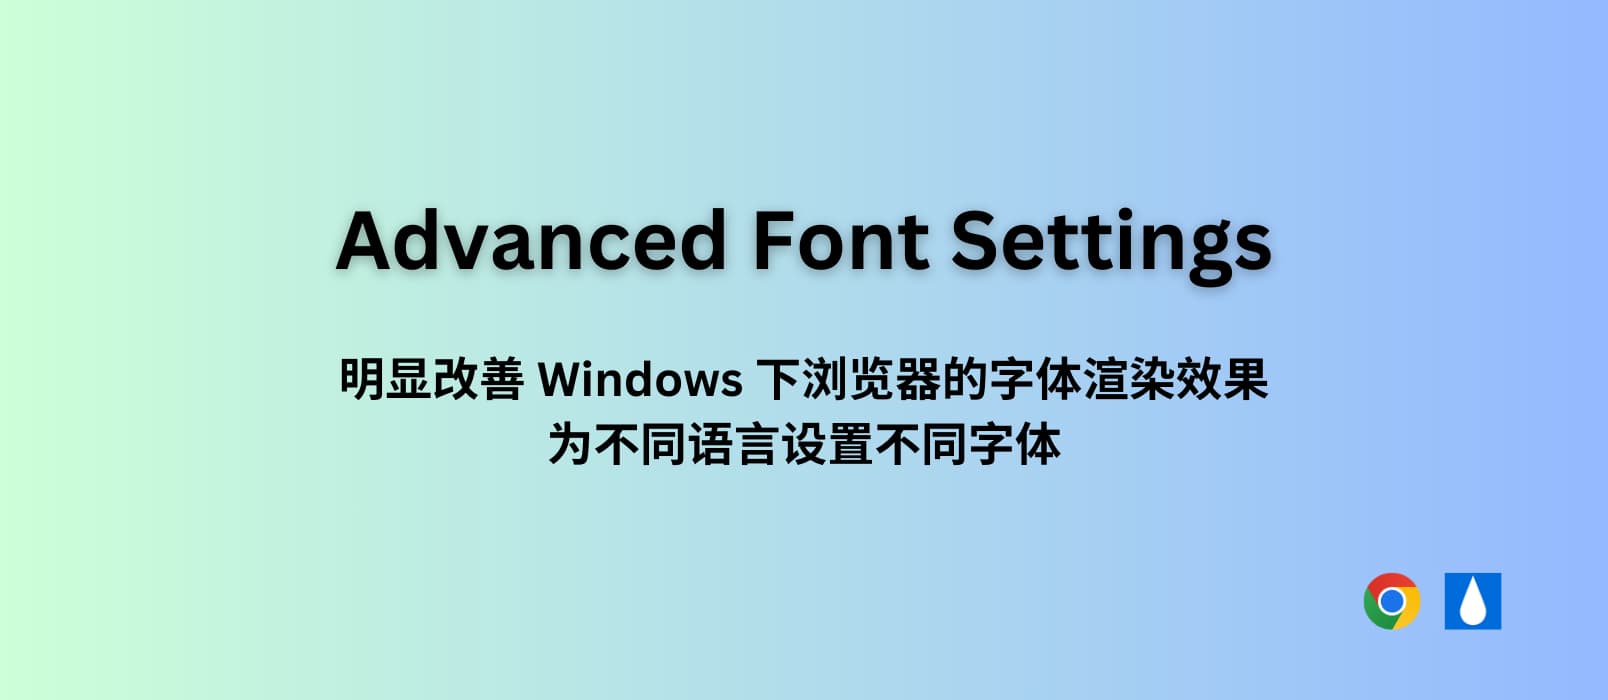 Advanced Font Settings - 明显改善 Windows 下浏览器的字体渲染效果，为不同语言设置不同字体[Chrome] 1